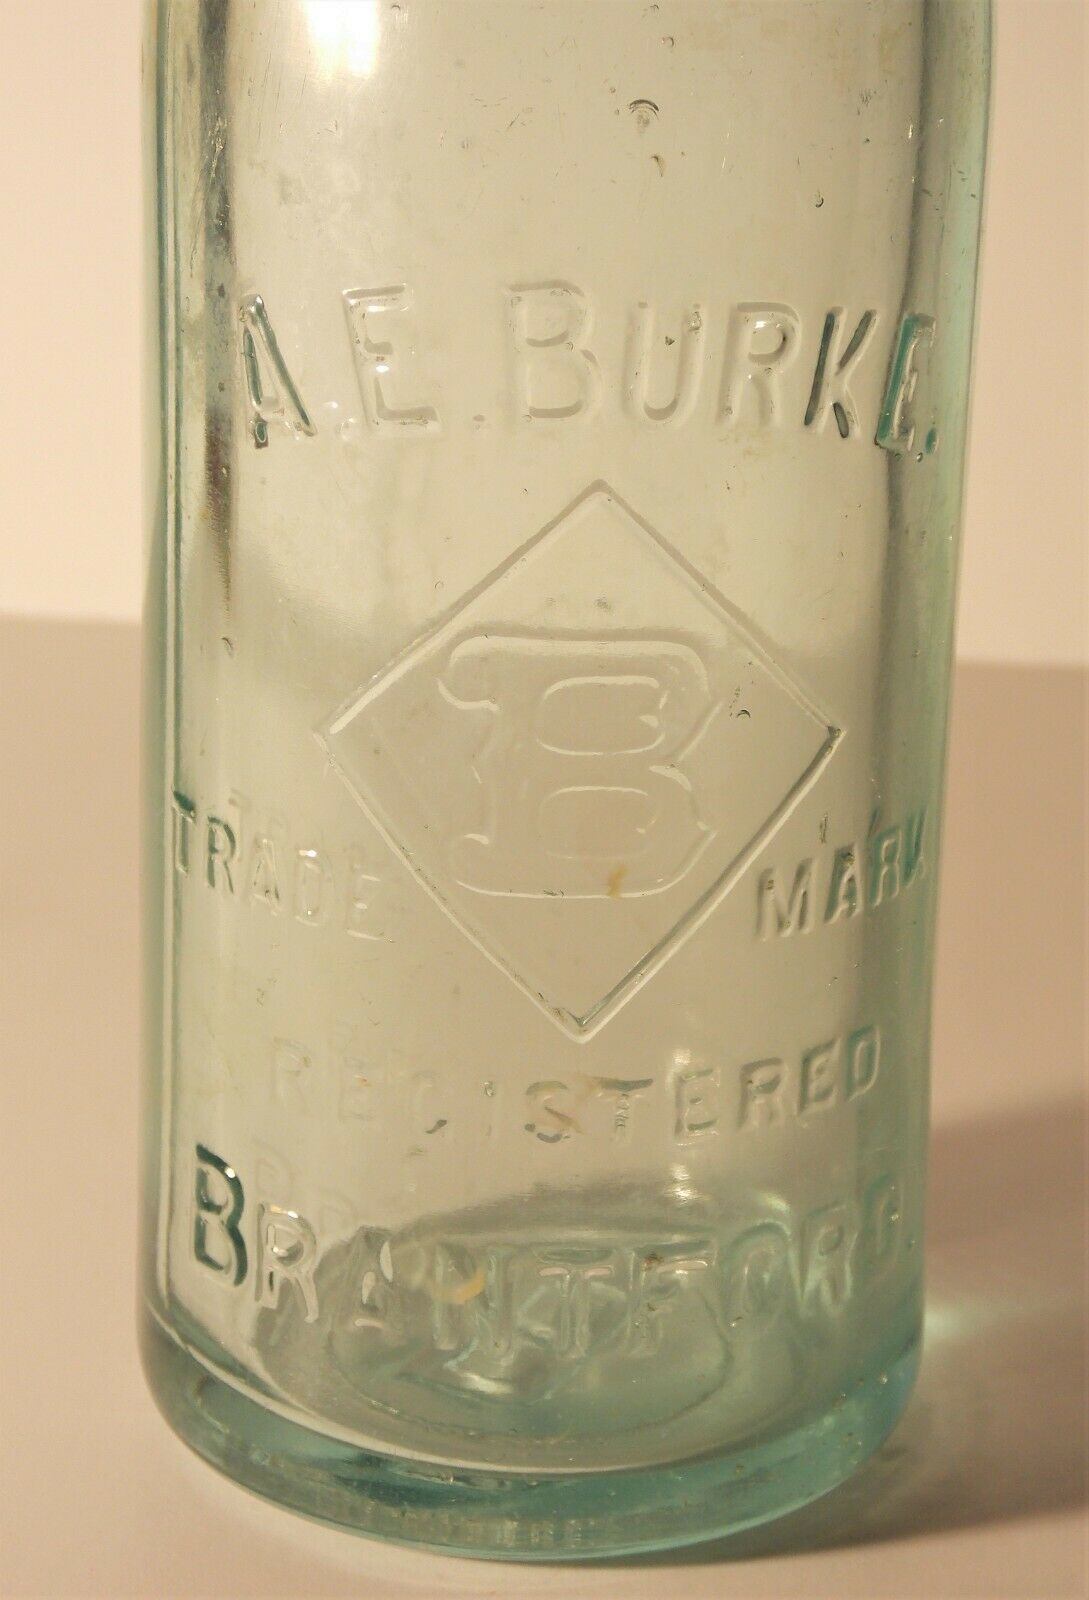 burke-brantfordAE1.jpg